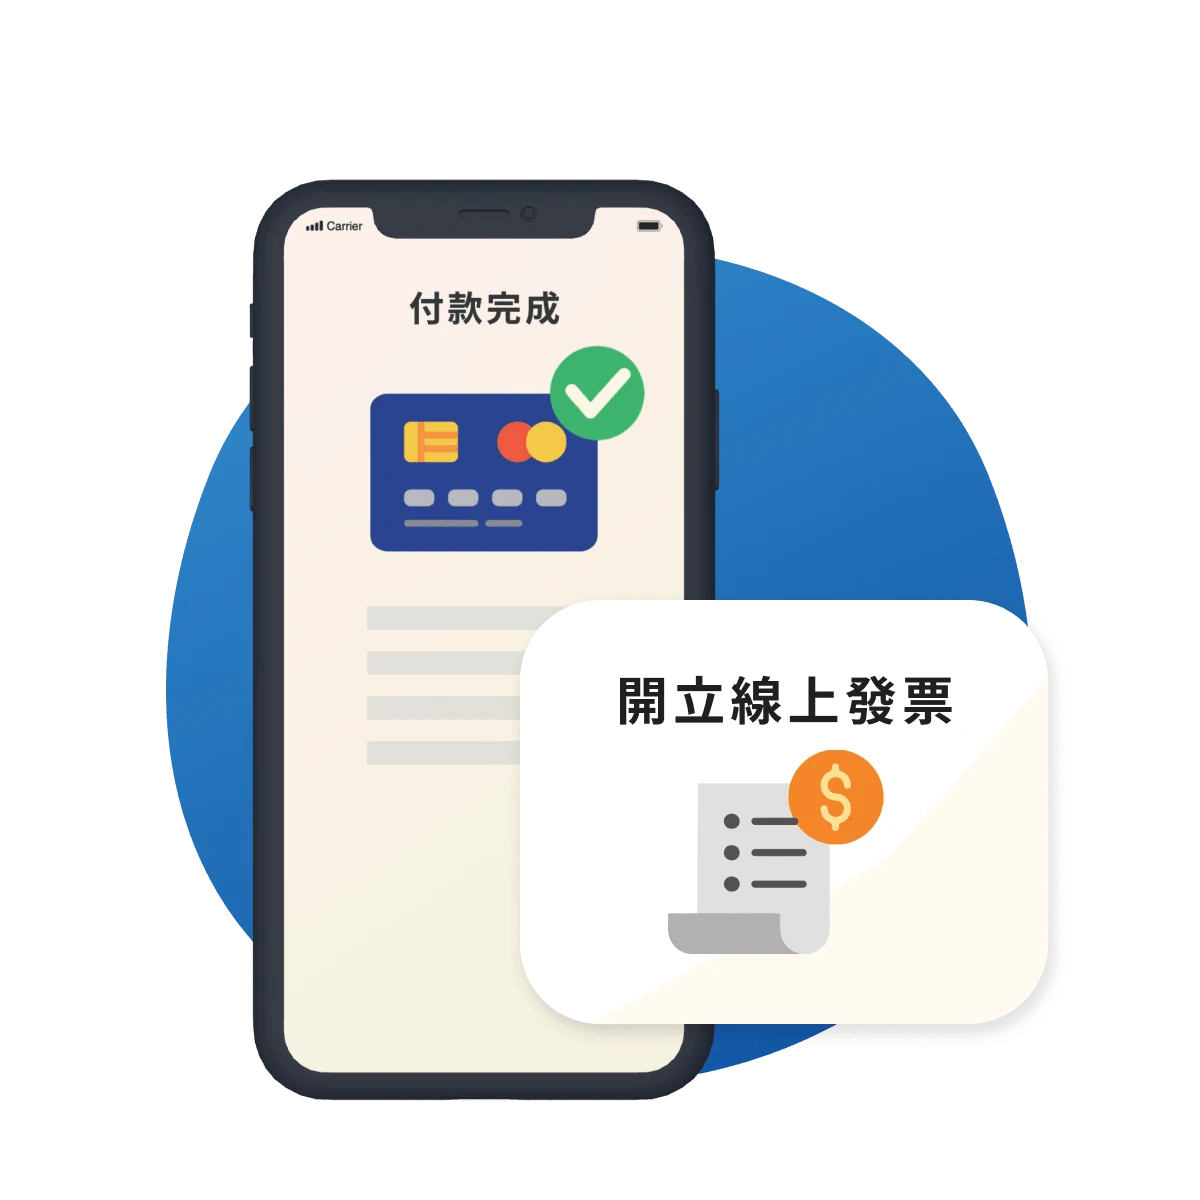 WishMobile 行動支付系統( 電子錢包系統 ) - 開立電子發票，節能環保不怕弄丟！可串接金流提供線上付款，經信用卡支付款項後，線上開立發票給消費者。完善品牌 APP / LINE 會員支付體驗。